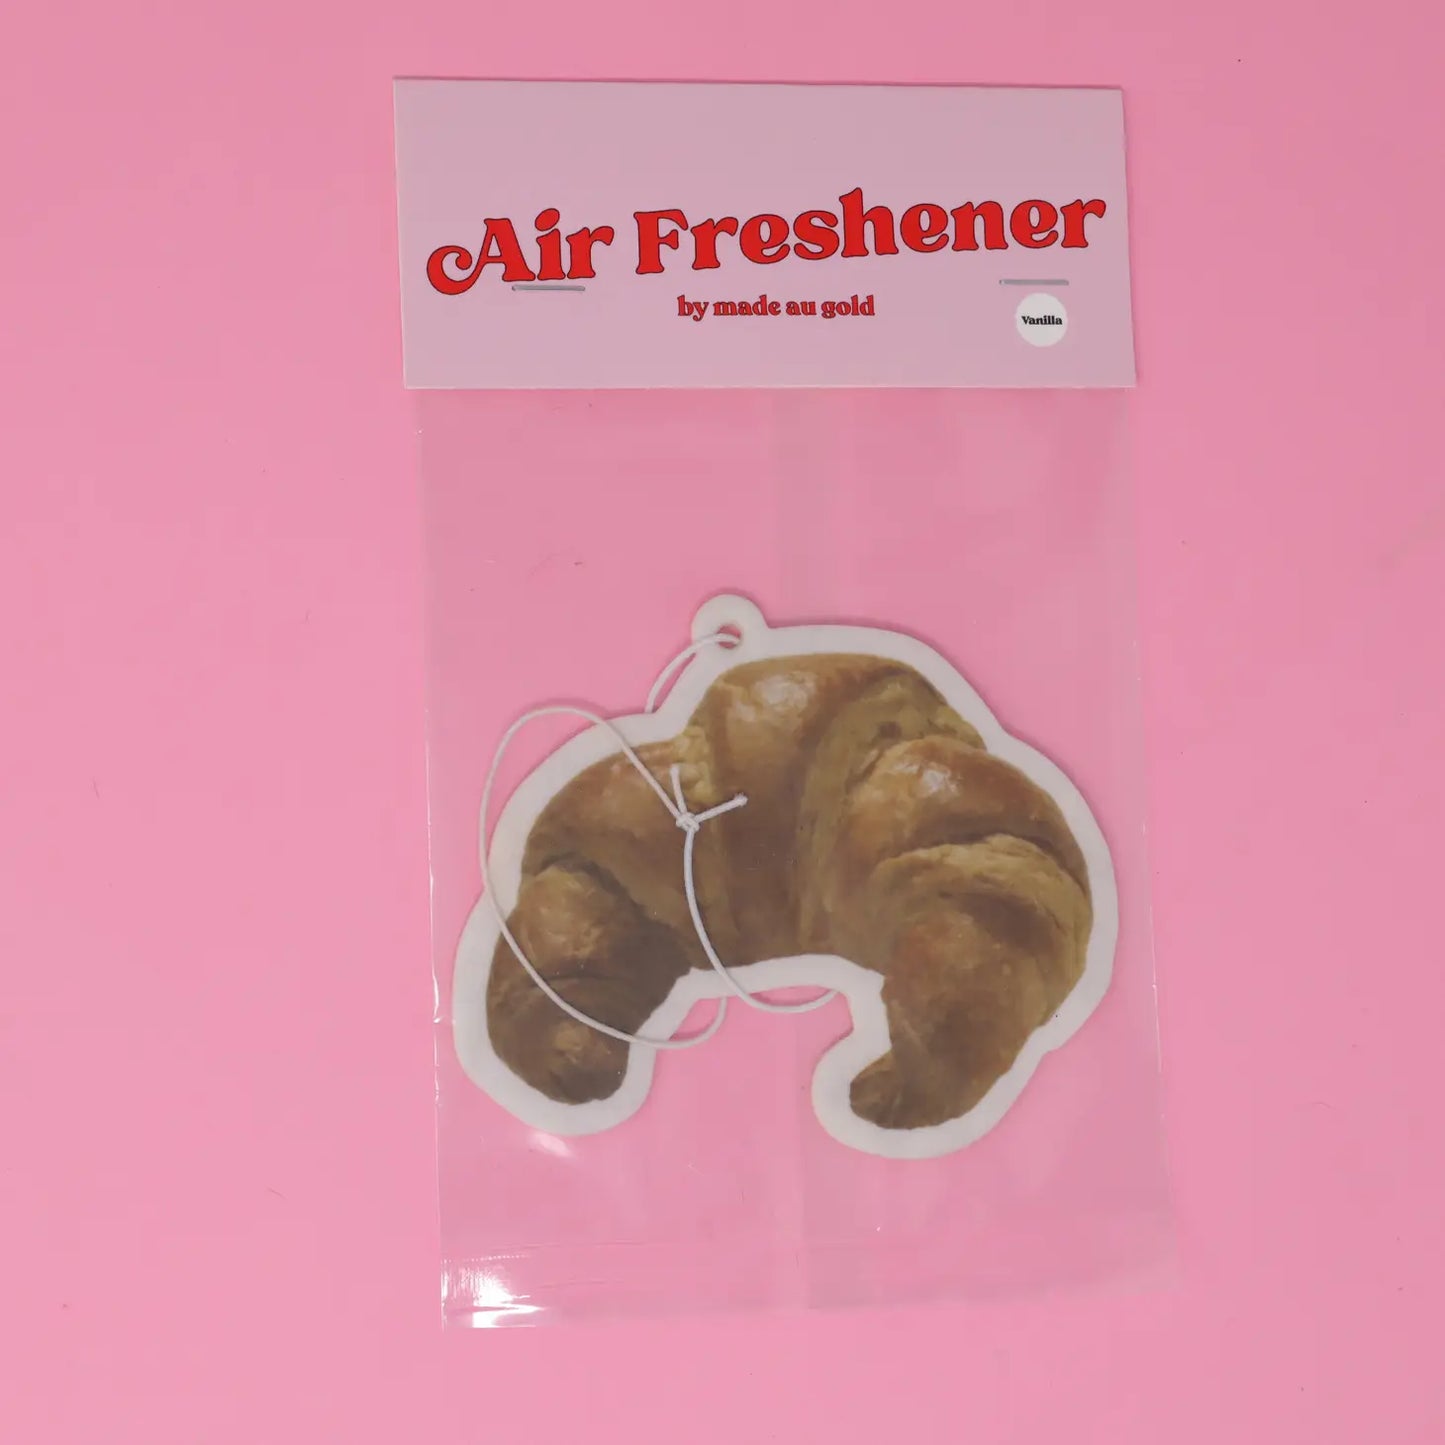 Made Au Gold Air Freshener